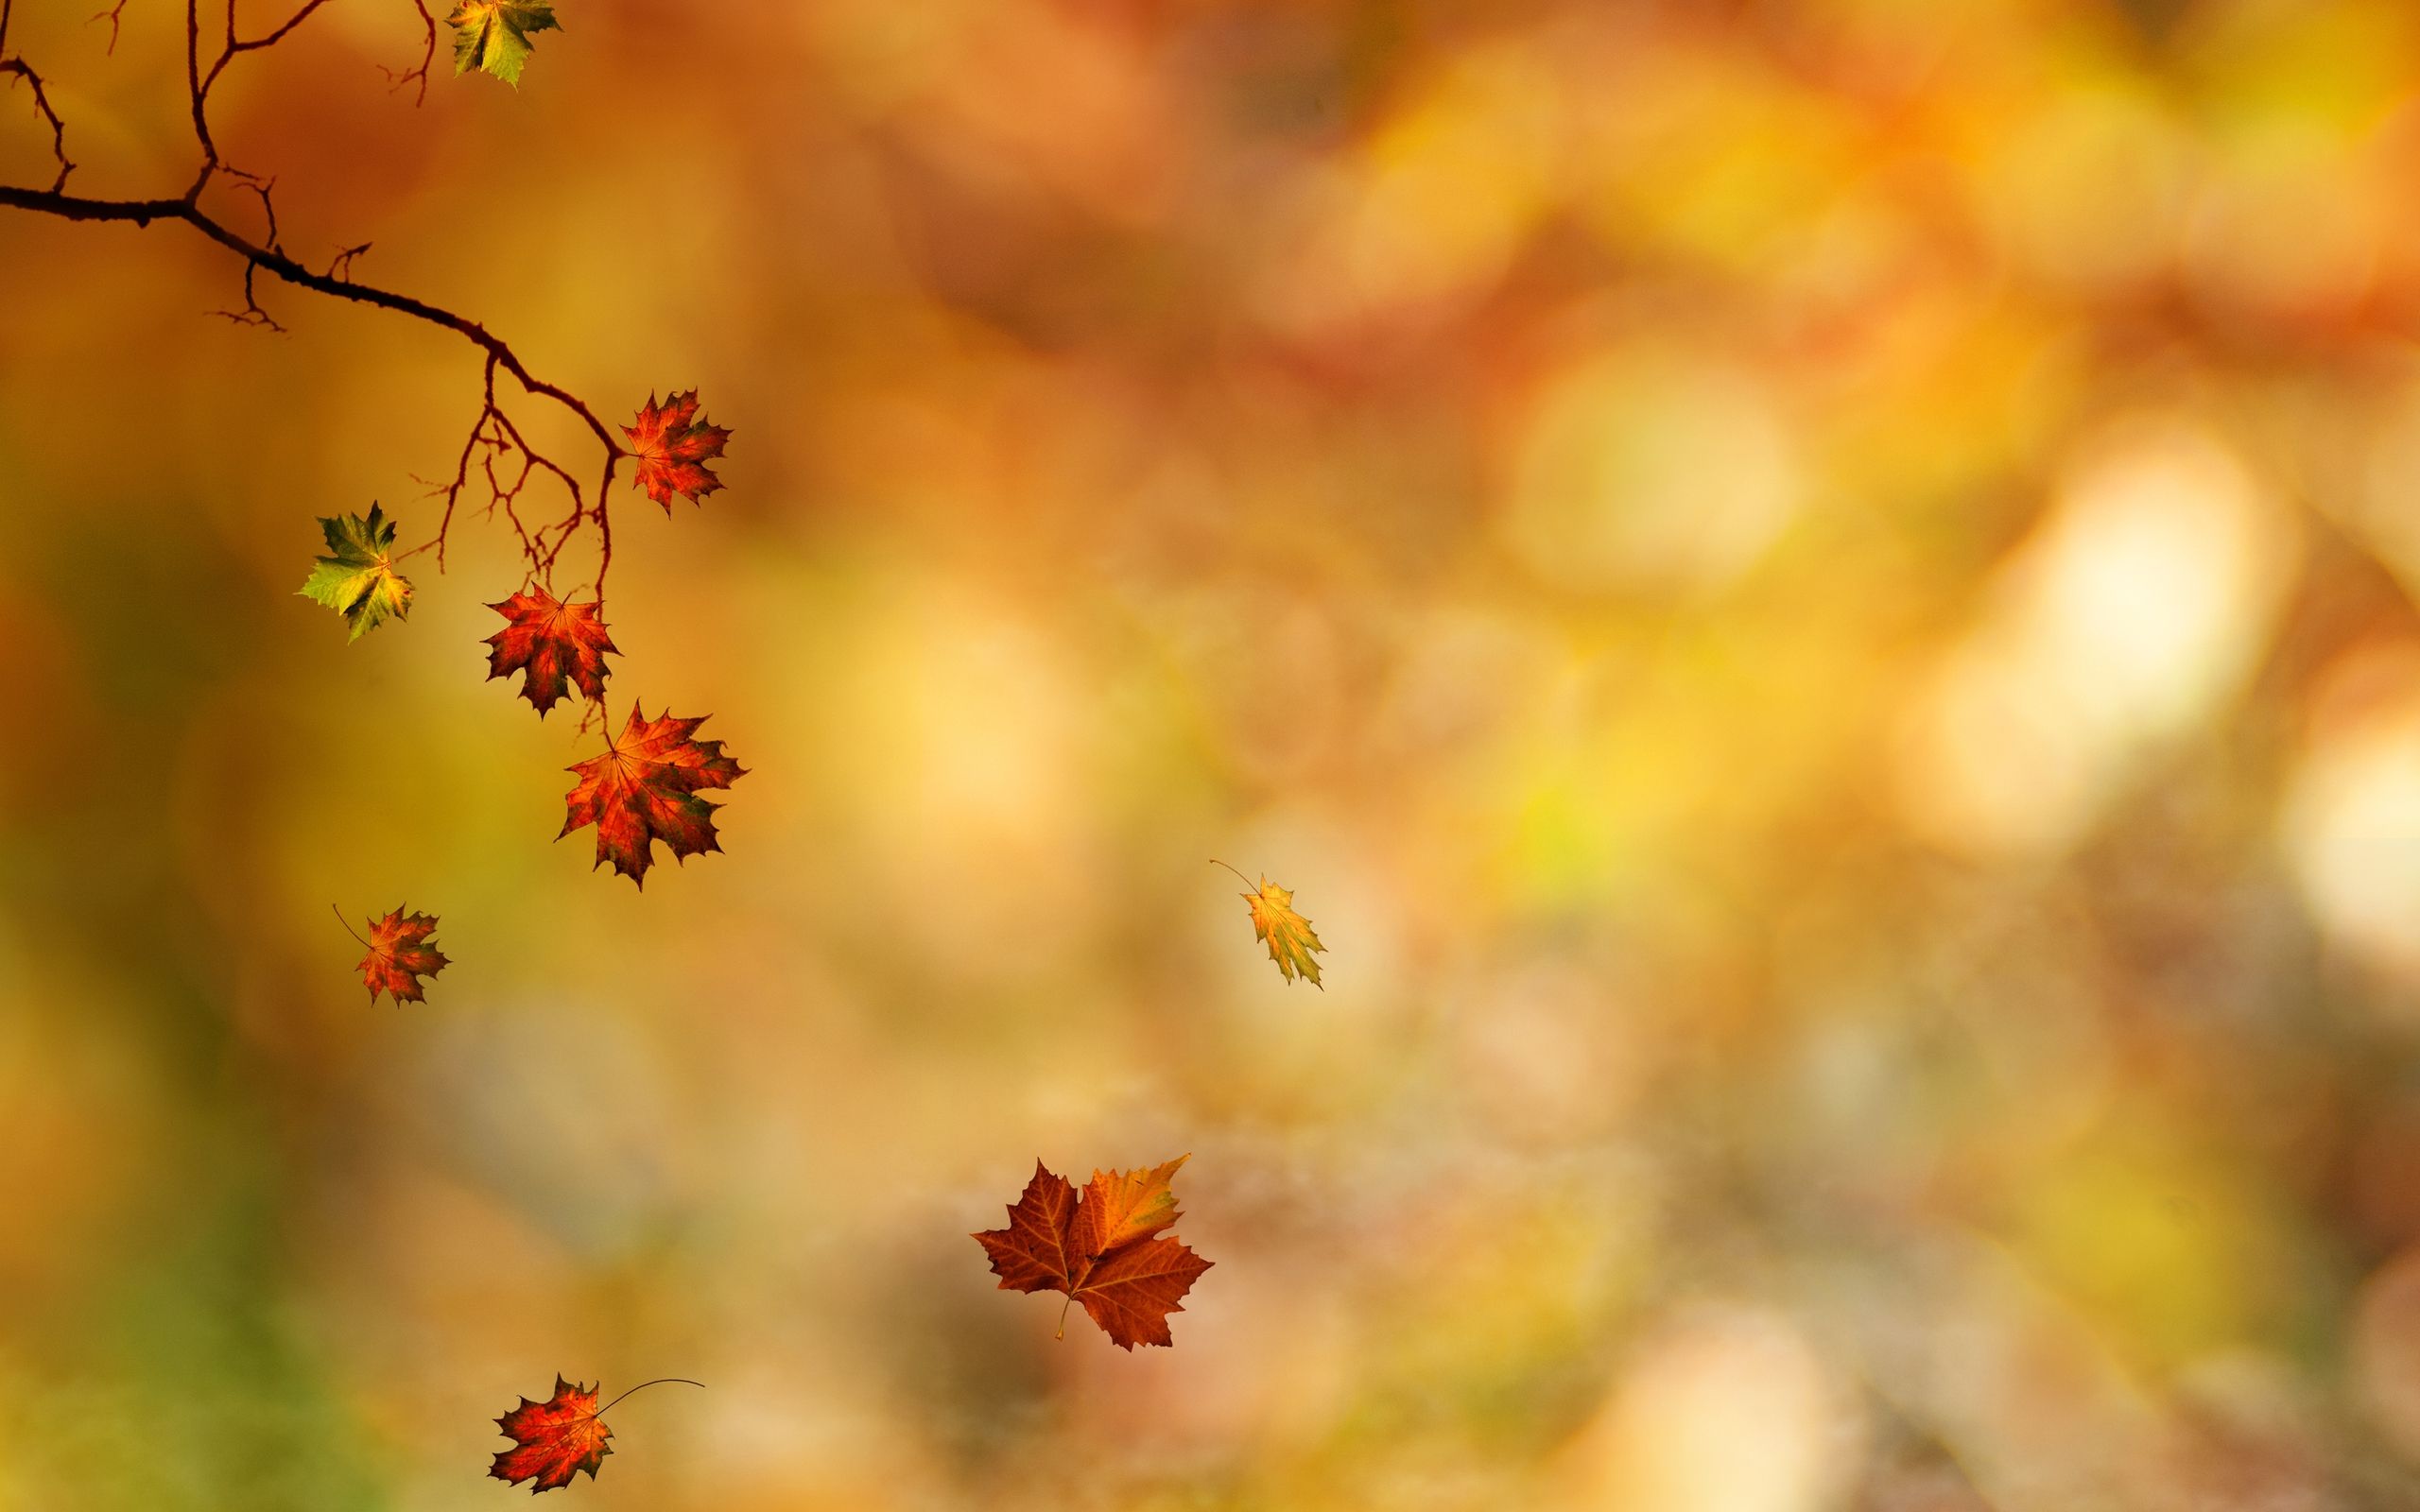 Falling Leaves Wallpaper. Fall Leaves Wallpaper, Leaves Wallpaper and Thanksgiving Leaves Wallpaper